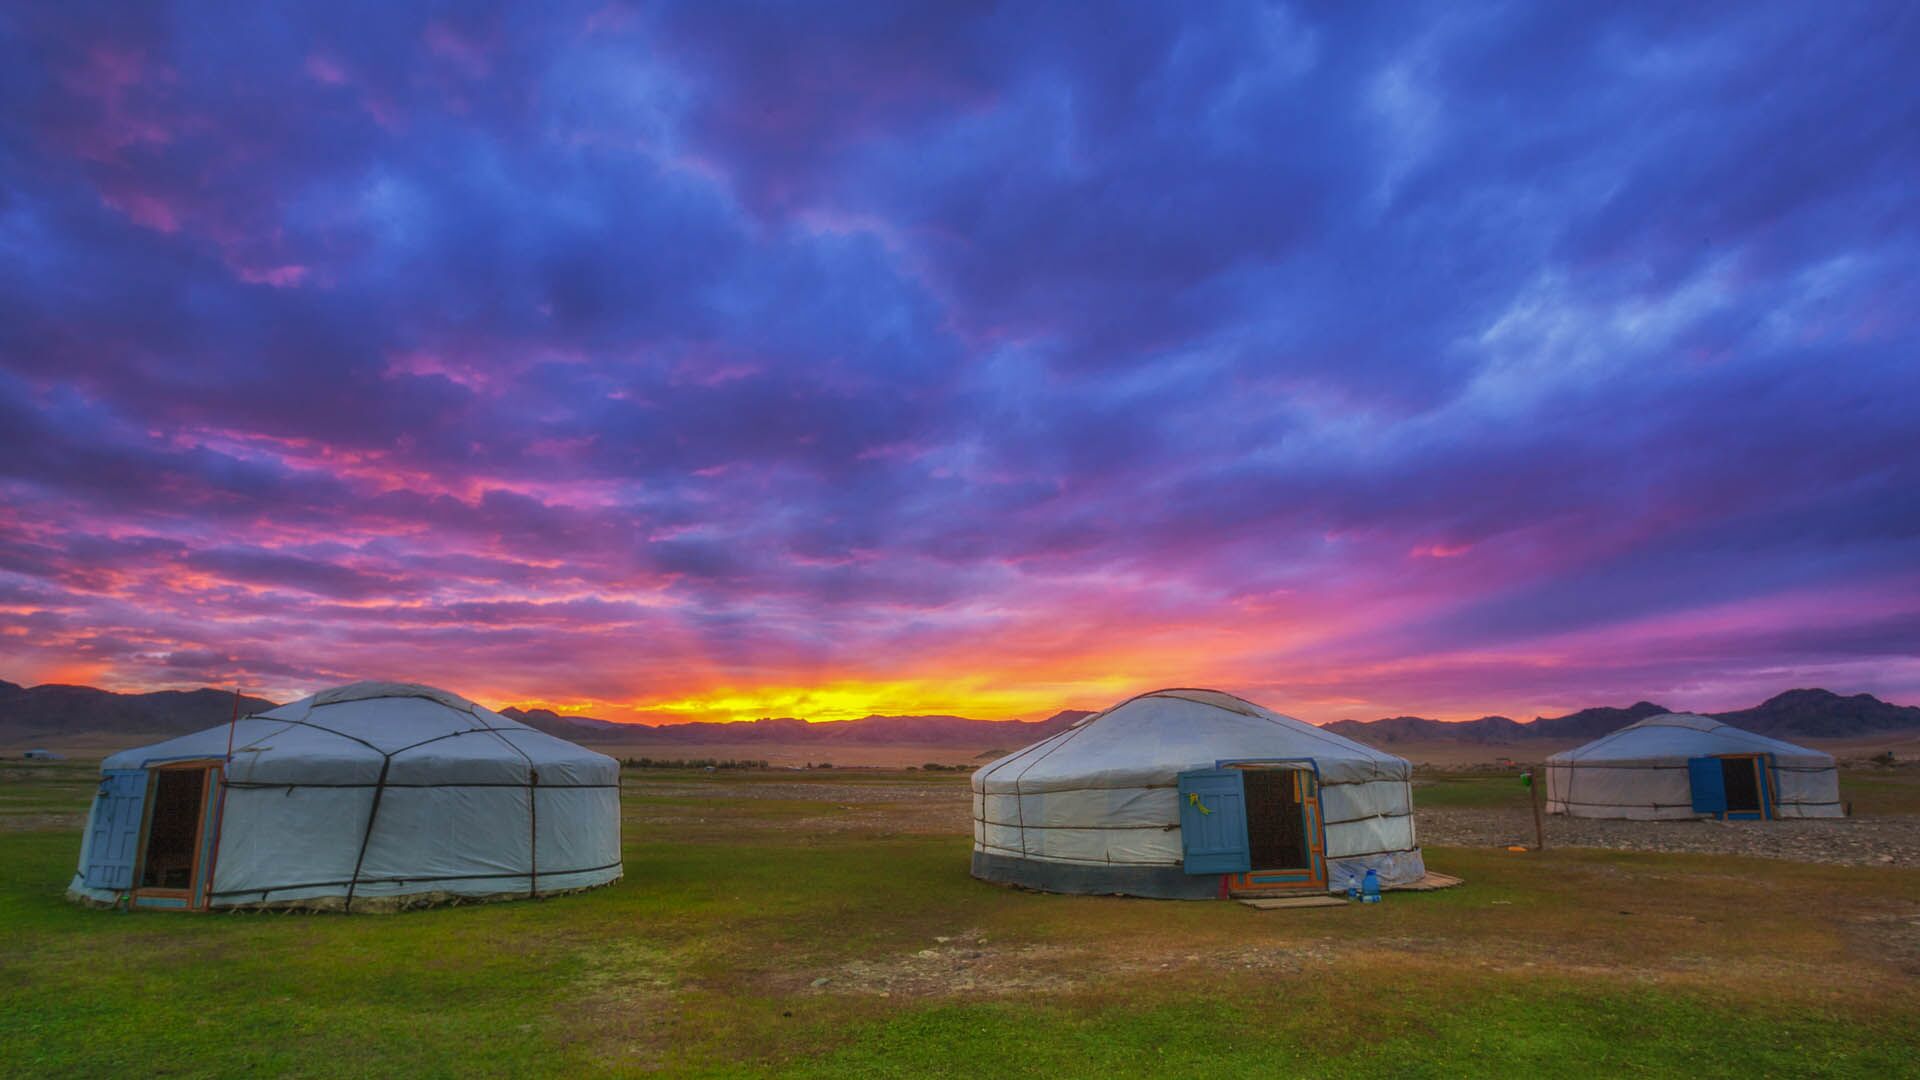 mongolia travel guide